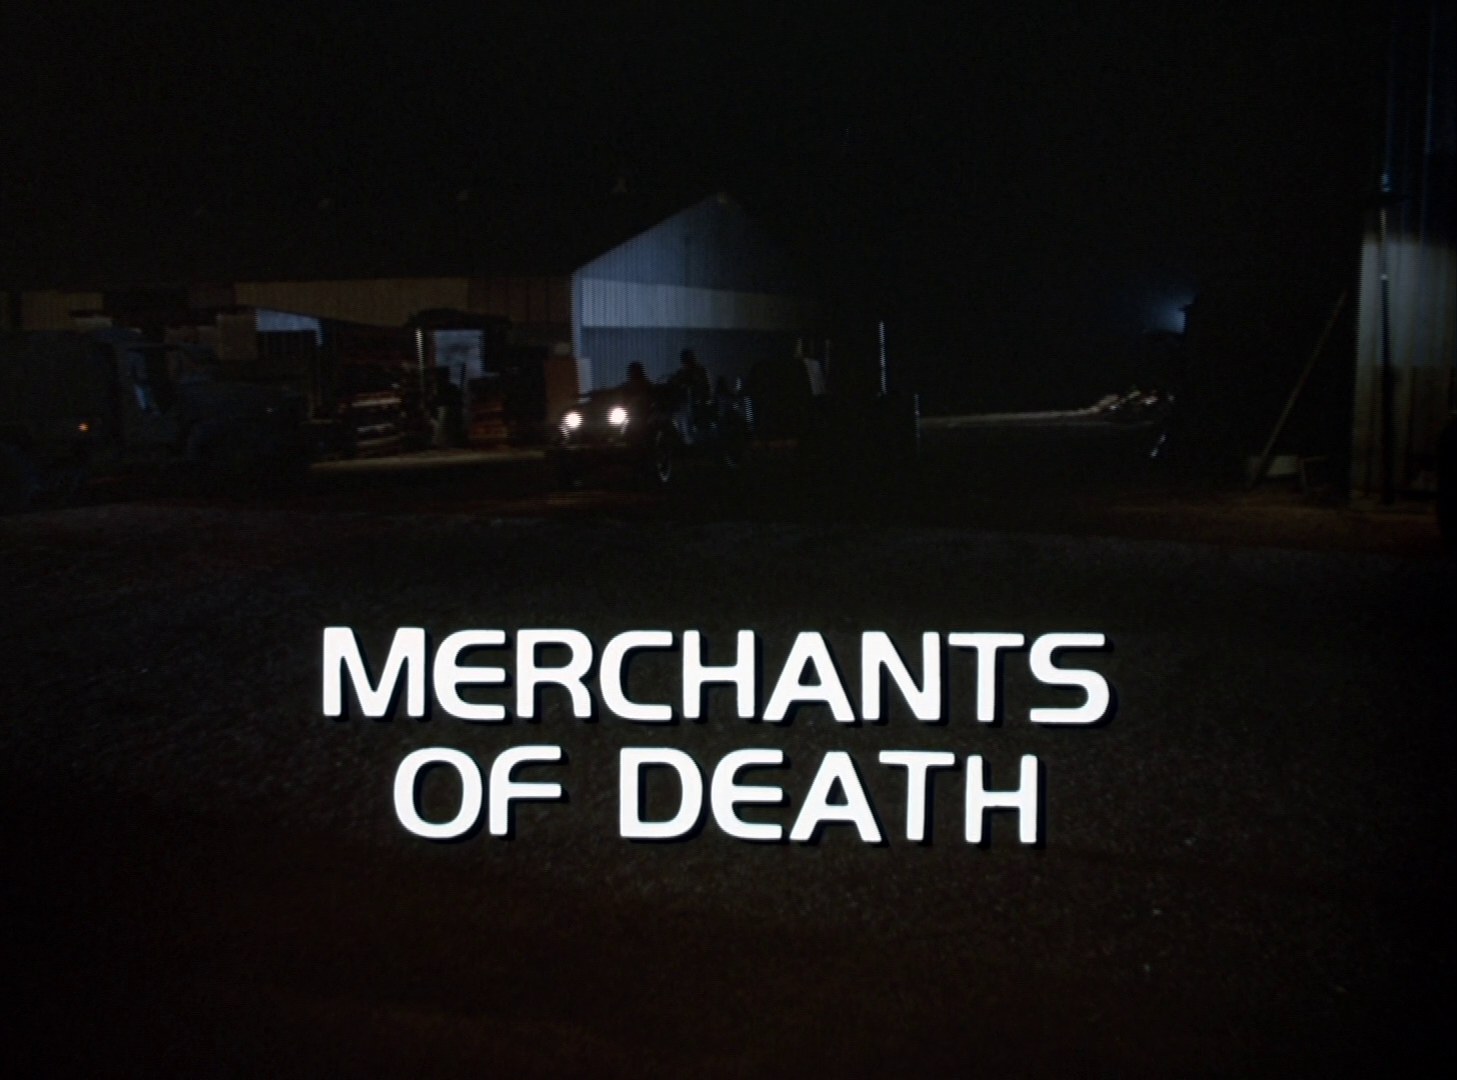 Knight Rider Season 2 - Episode 24 - Merchants Of Death - Photo 1